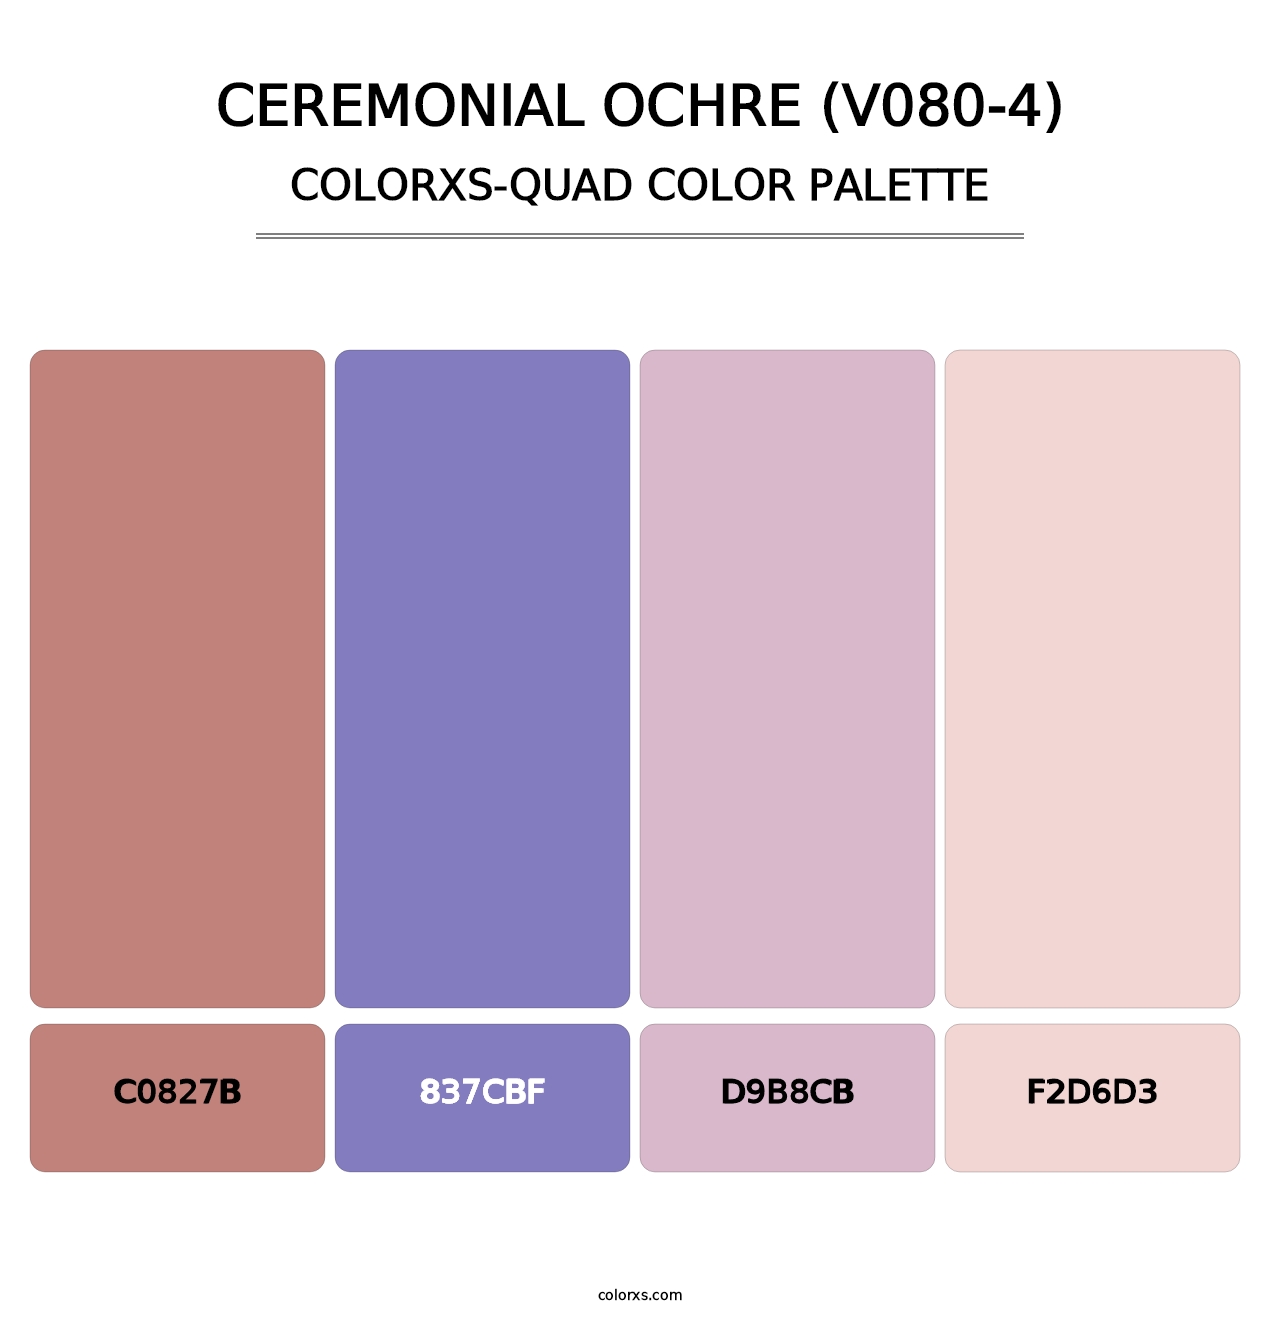 Ceremonial Ochre (V080-4) - Colorxs Quad Palette